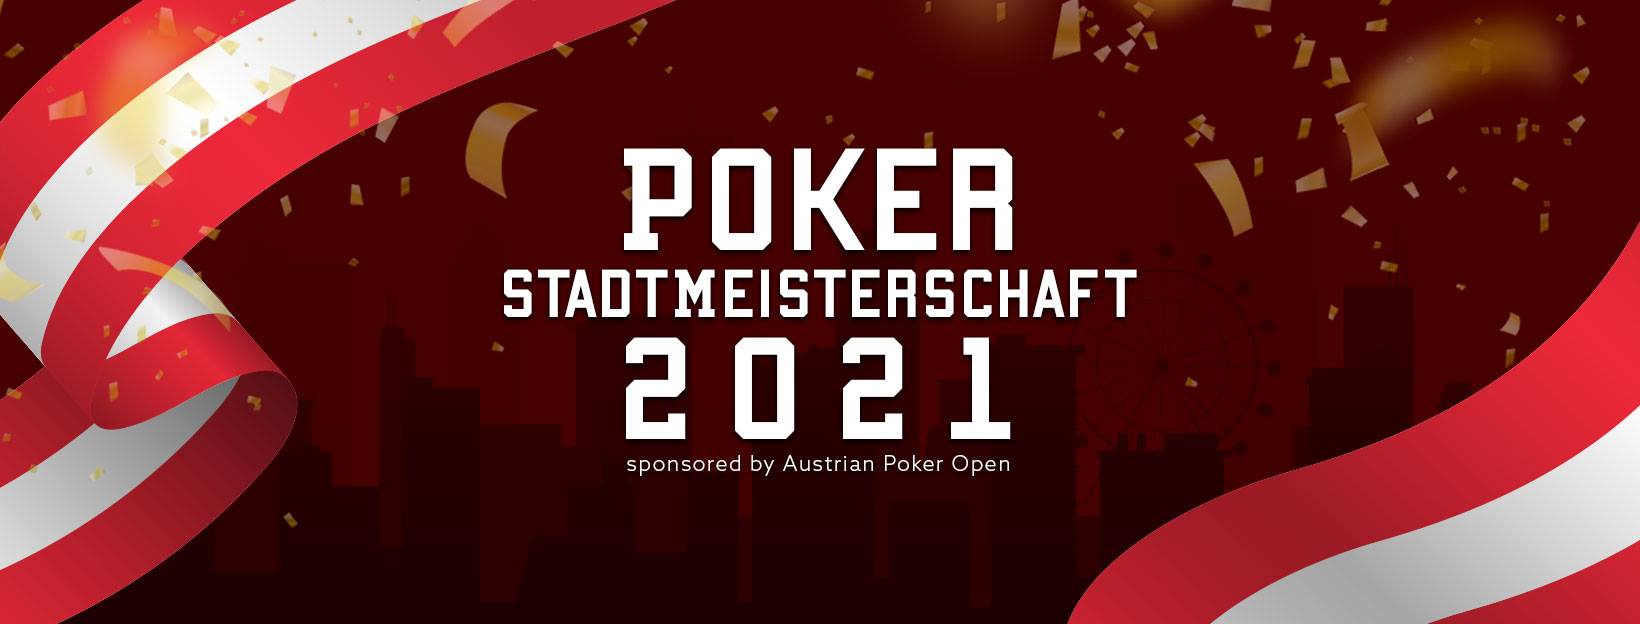 Poker Meisterschaft Gerasdorf bei Wien